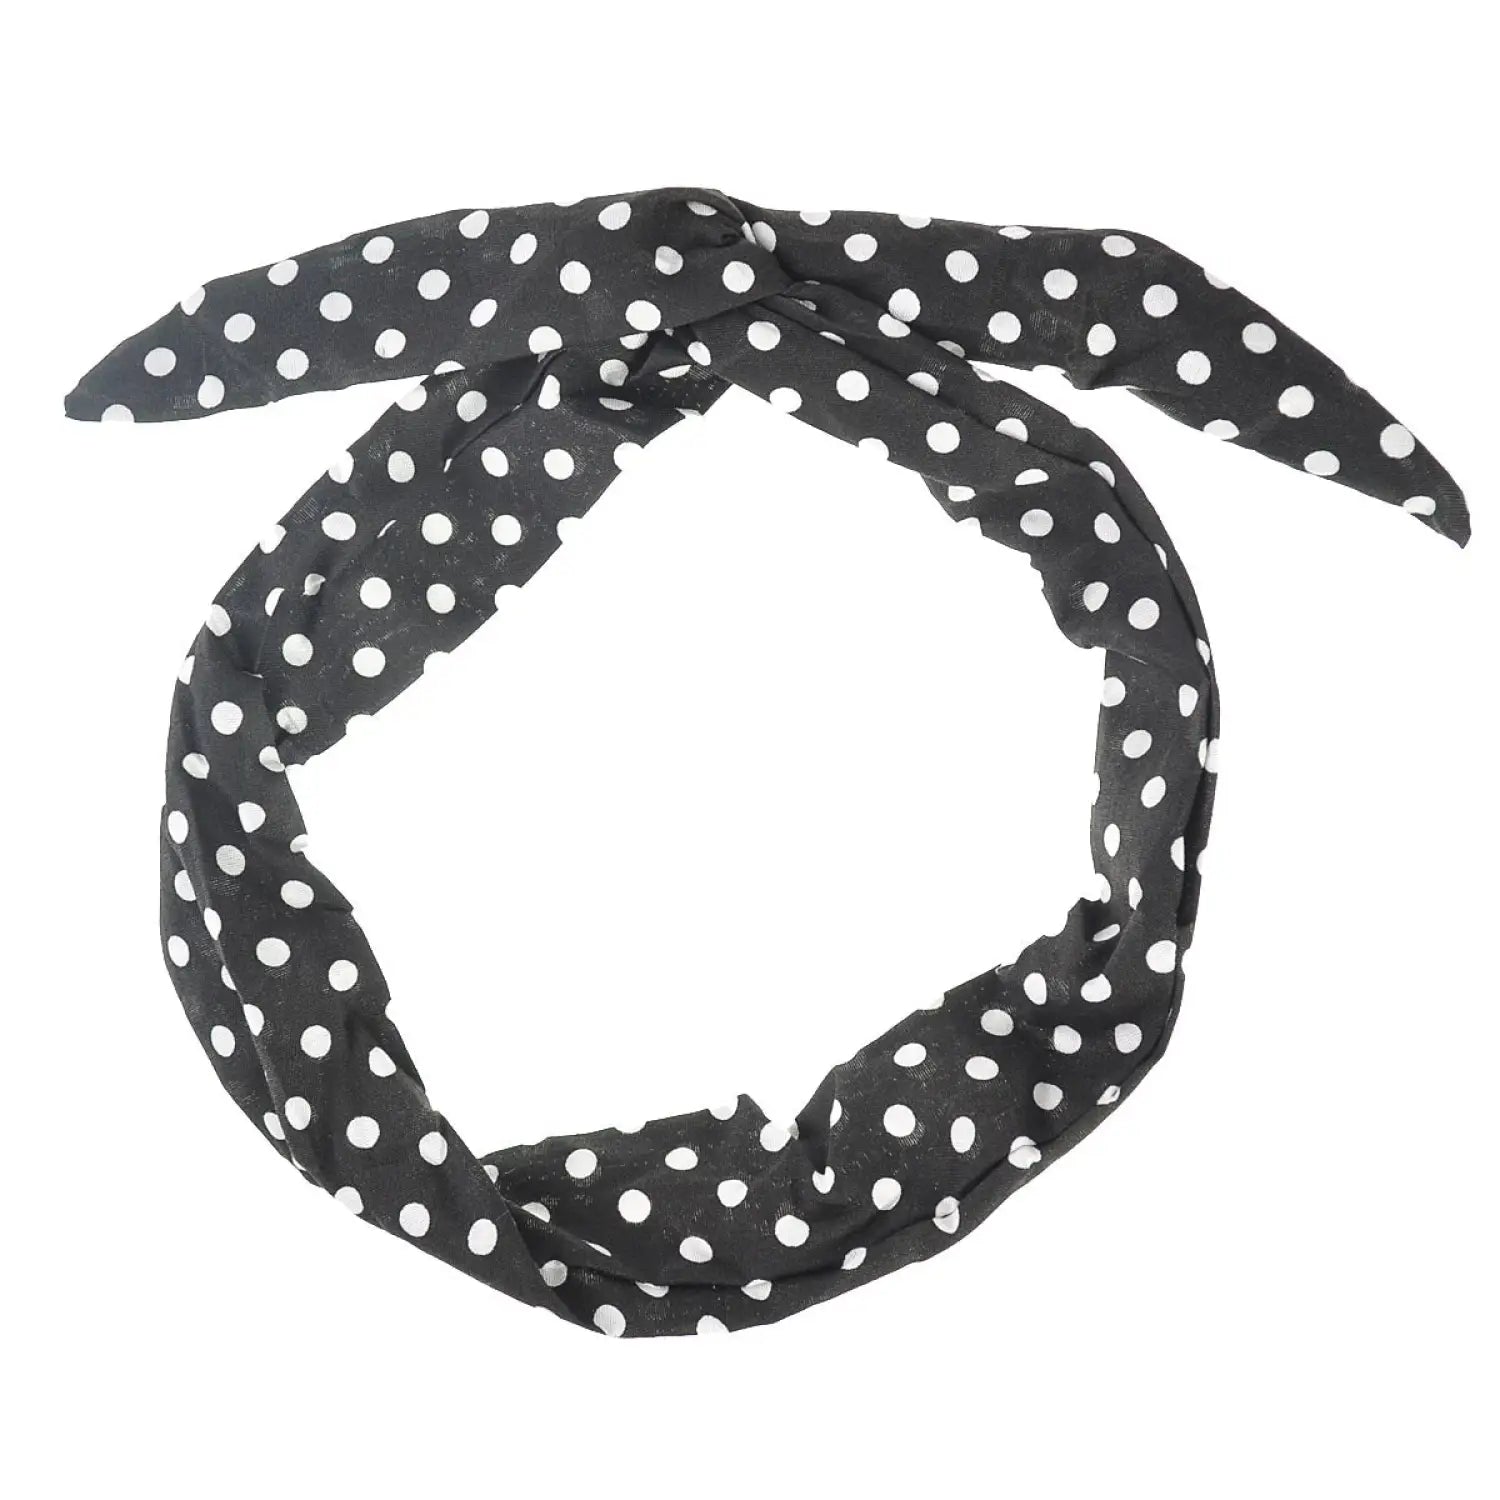 Black and white polka dot headband with bunny ears design